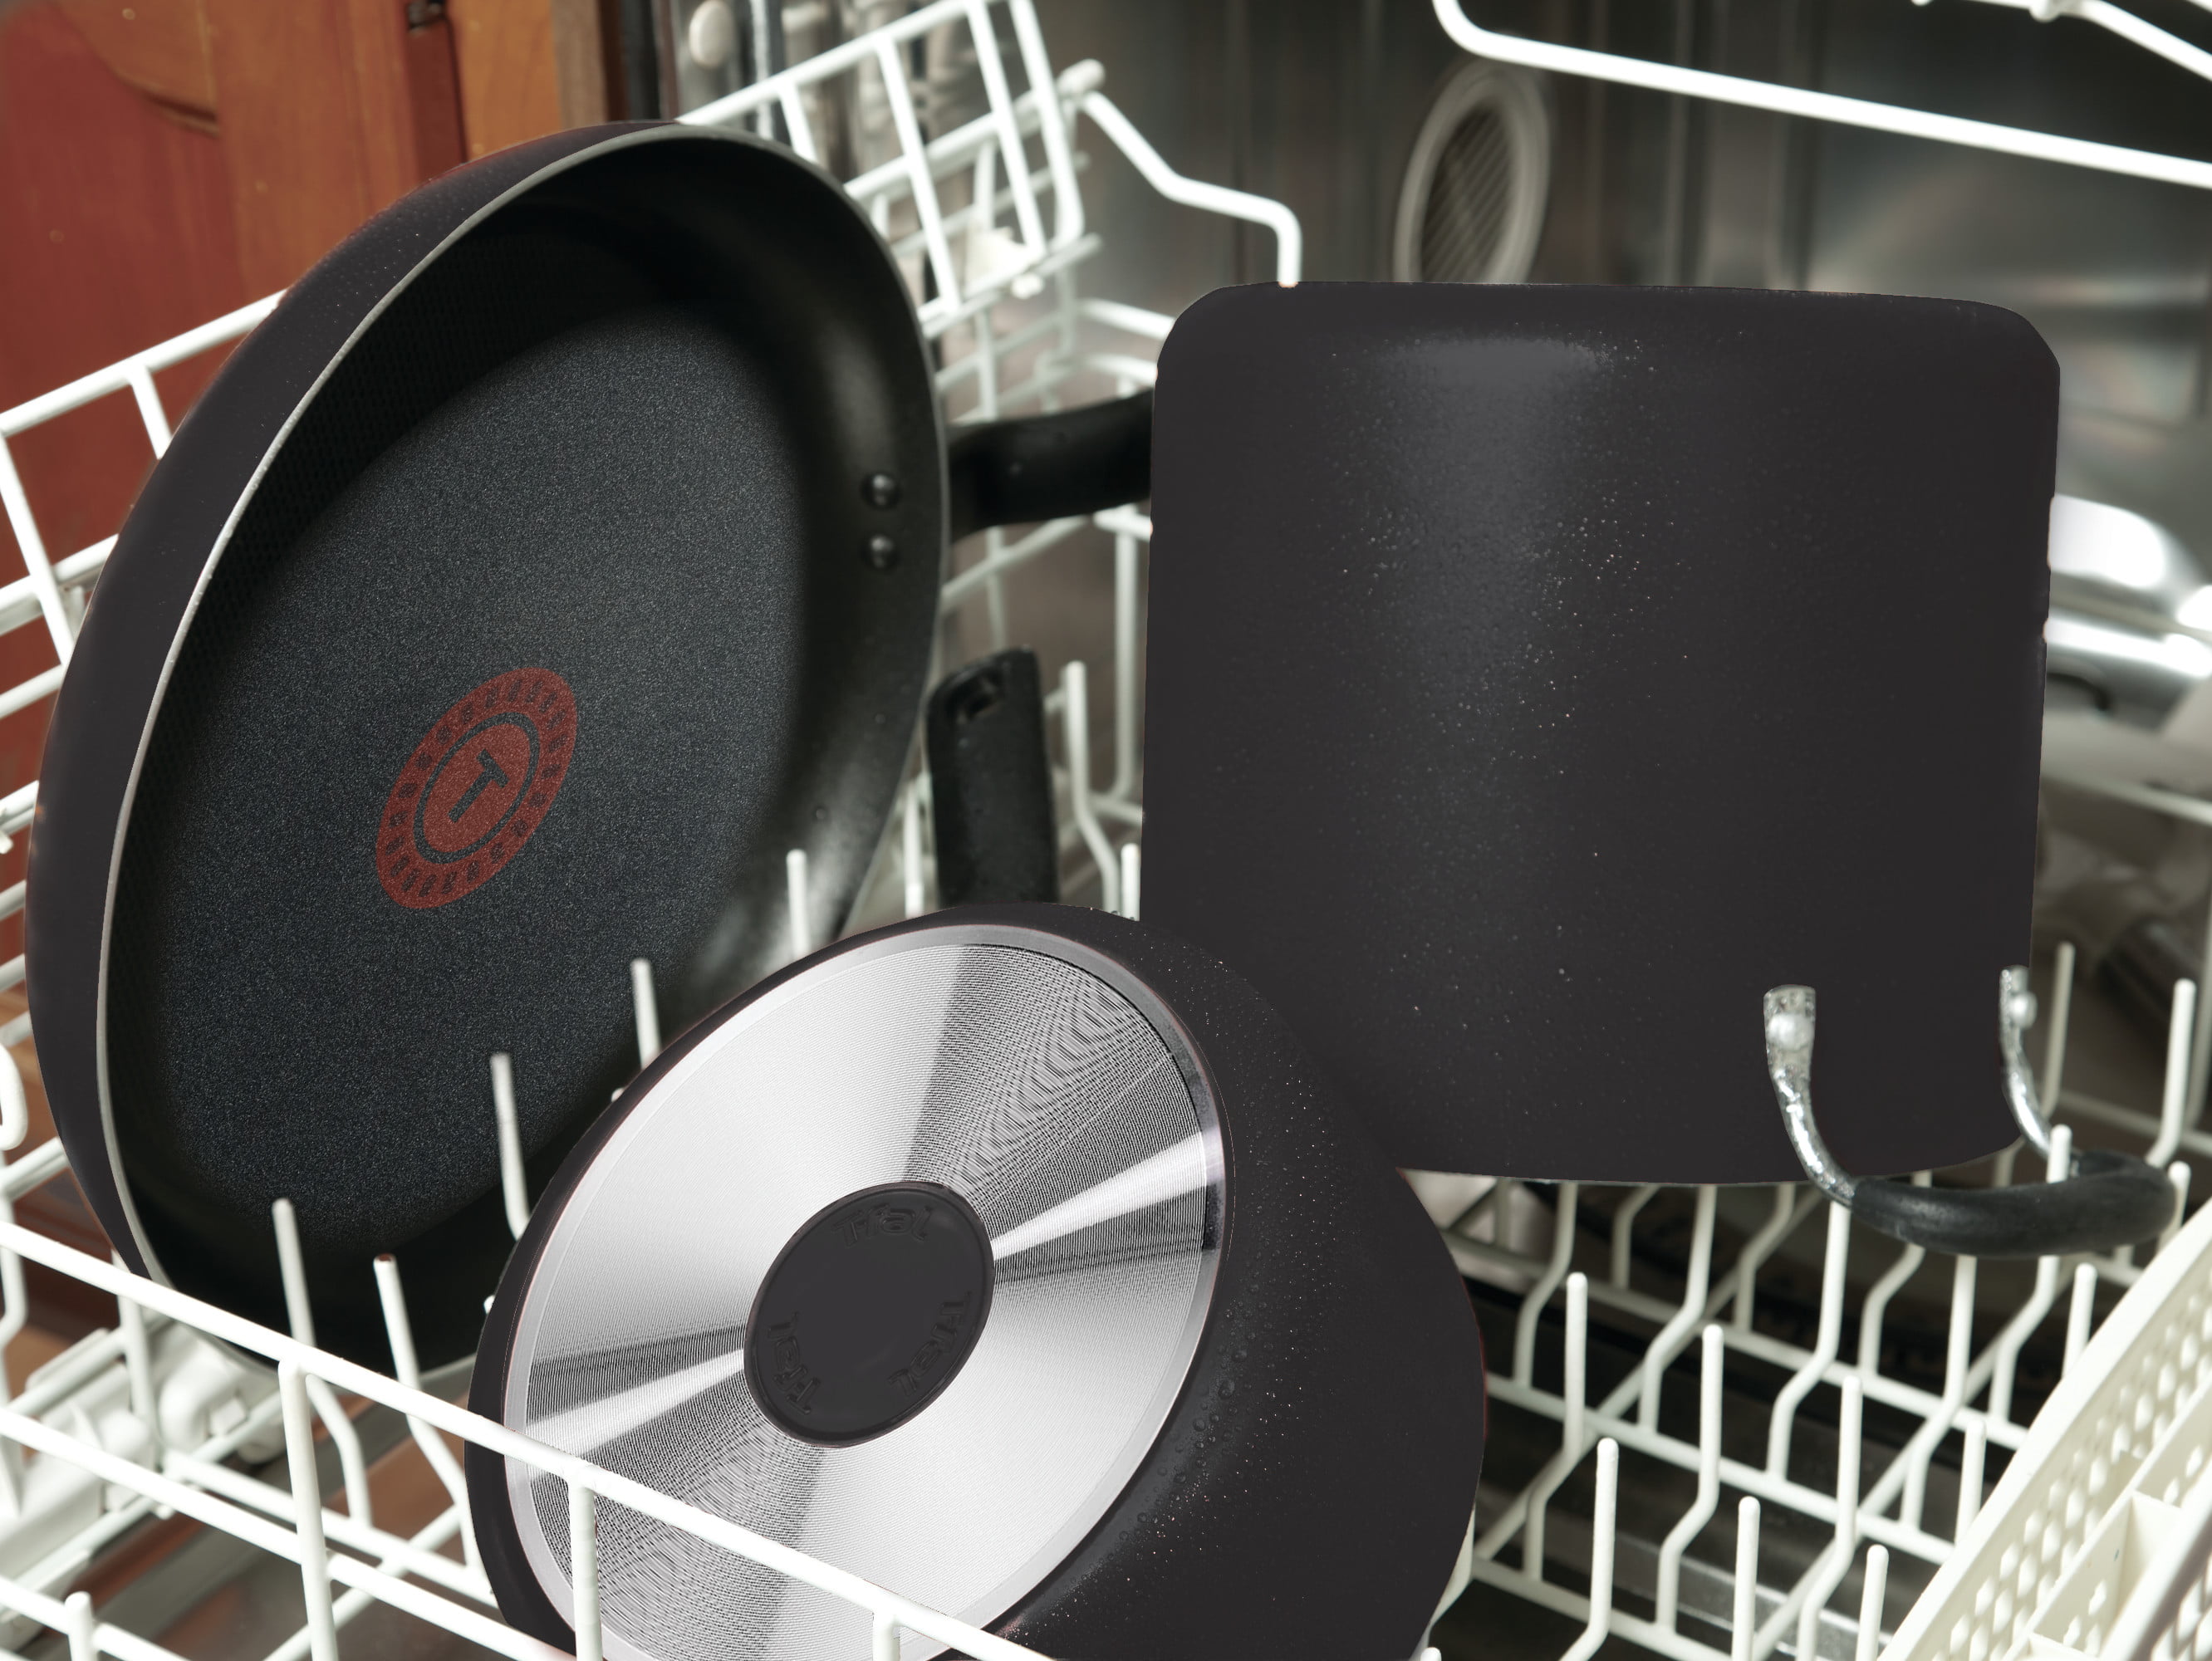  T-fal Initiatives Nonstick Fry Pan 10 .5 Inch Oven Safe 350F  Pots and Pans, Dishwasher Safe Black : Everything Else